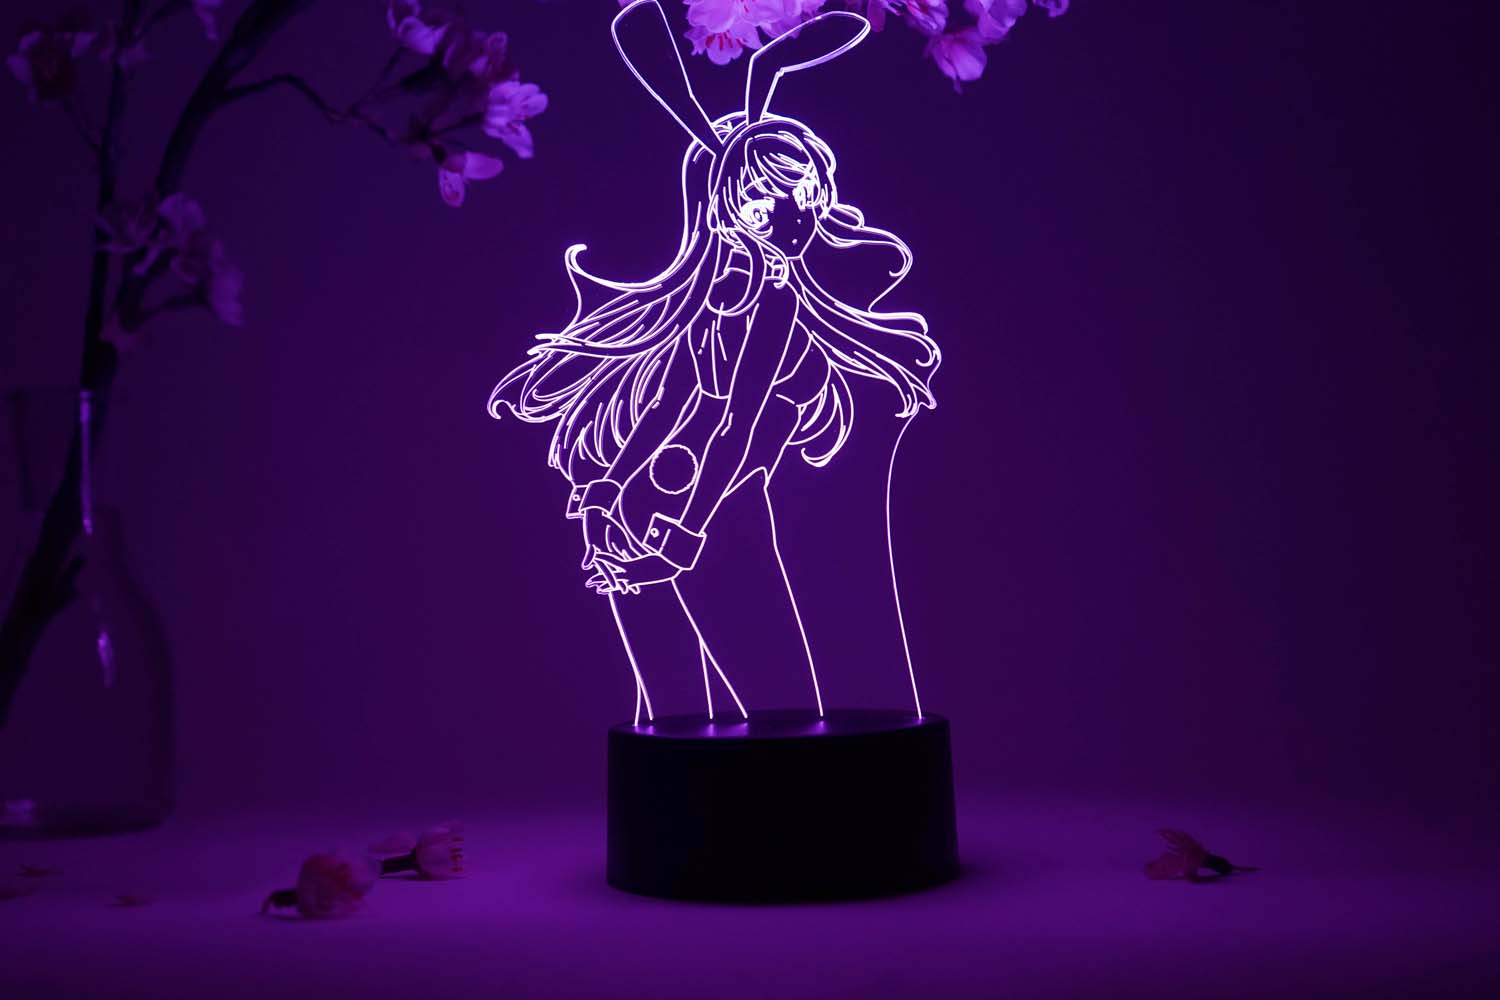 Bunny Girl Senpai Otaku Lamp (Rascal Does Not Dream of Bunny Girl Senpai)